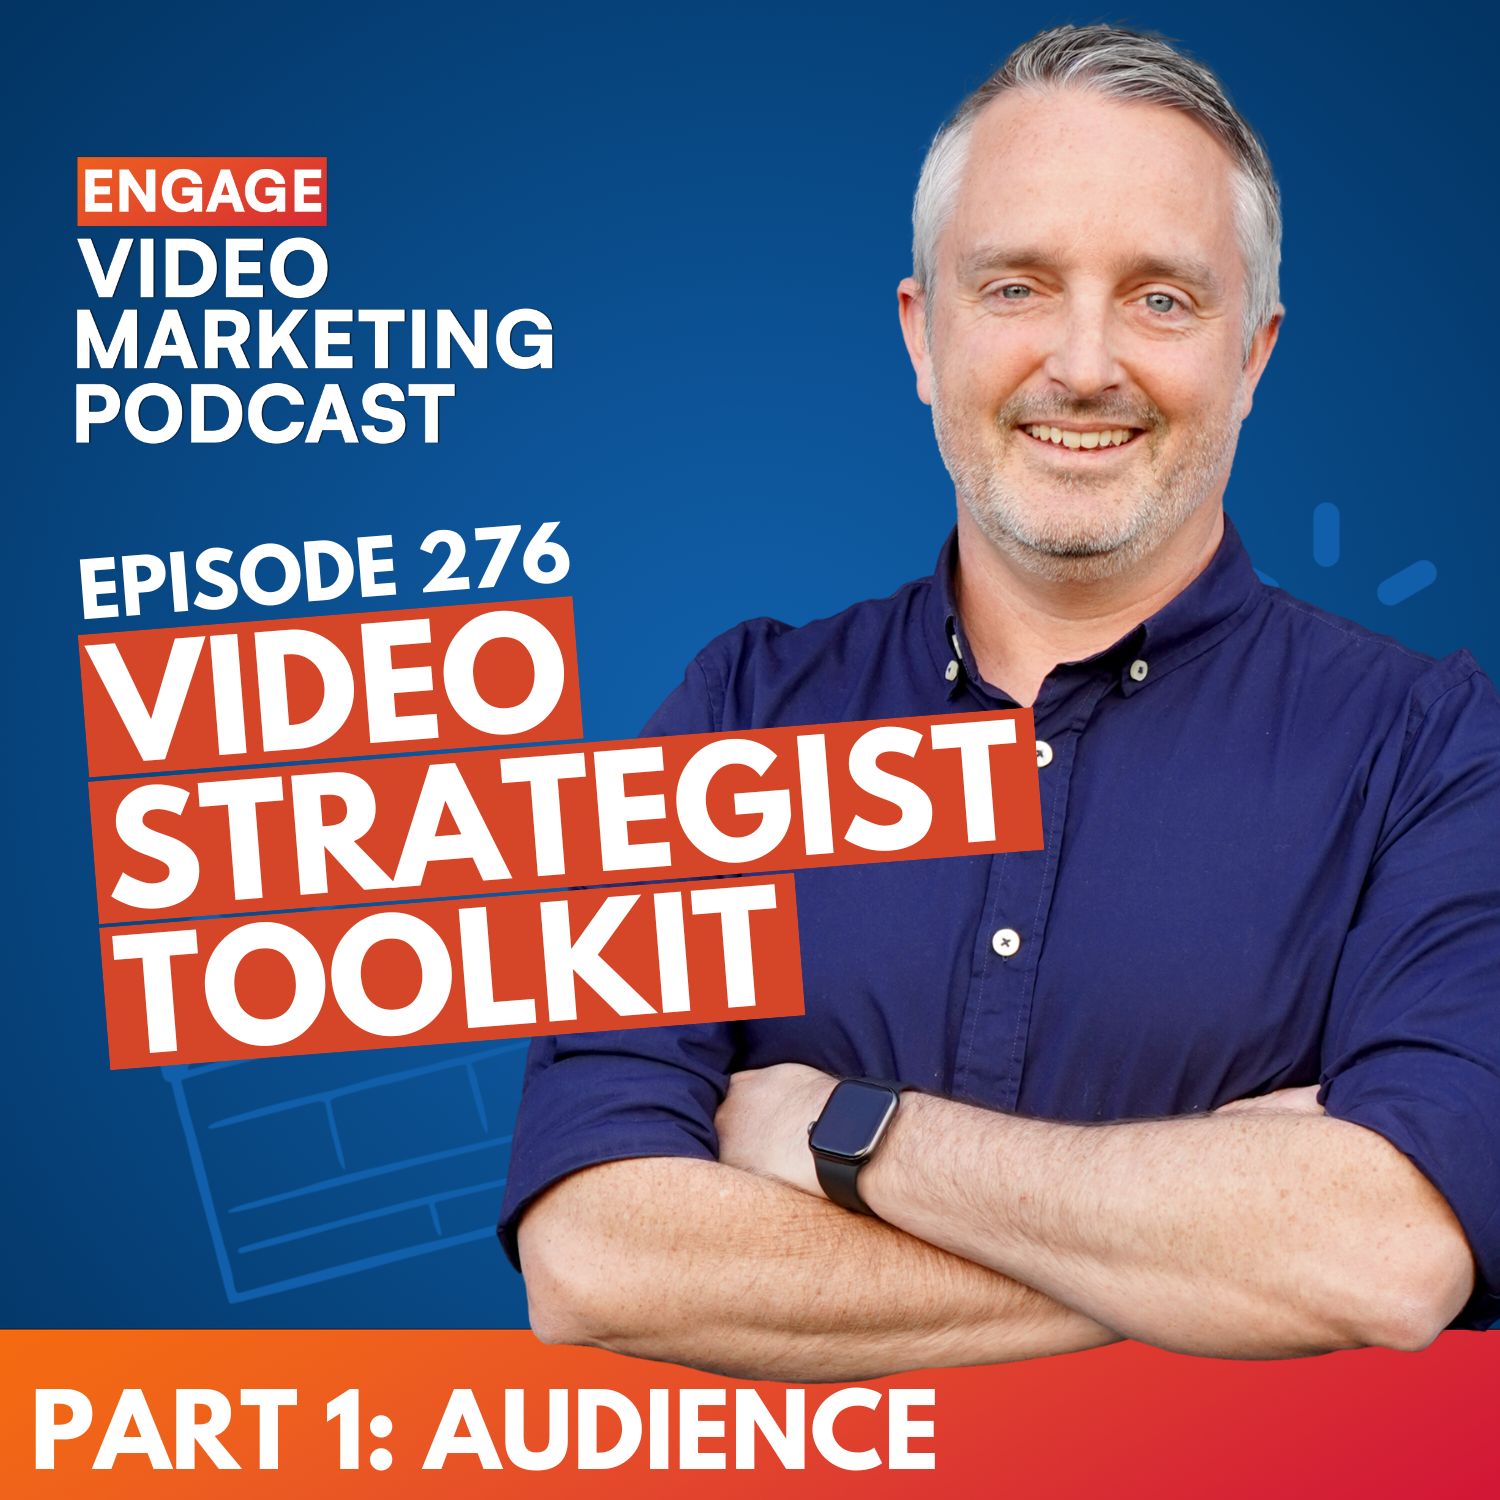 Video Strategist Toolkit Part 1: Audience